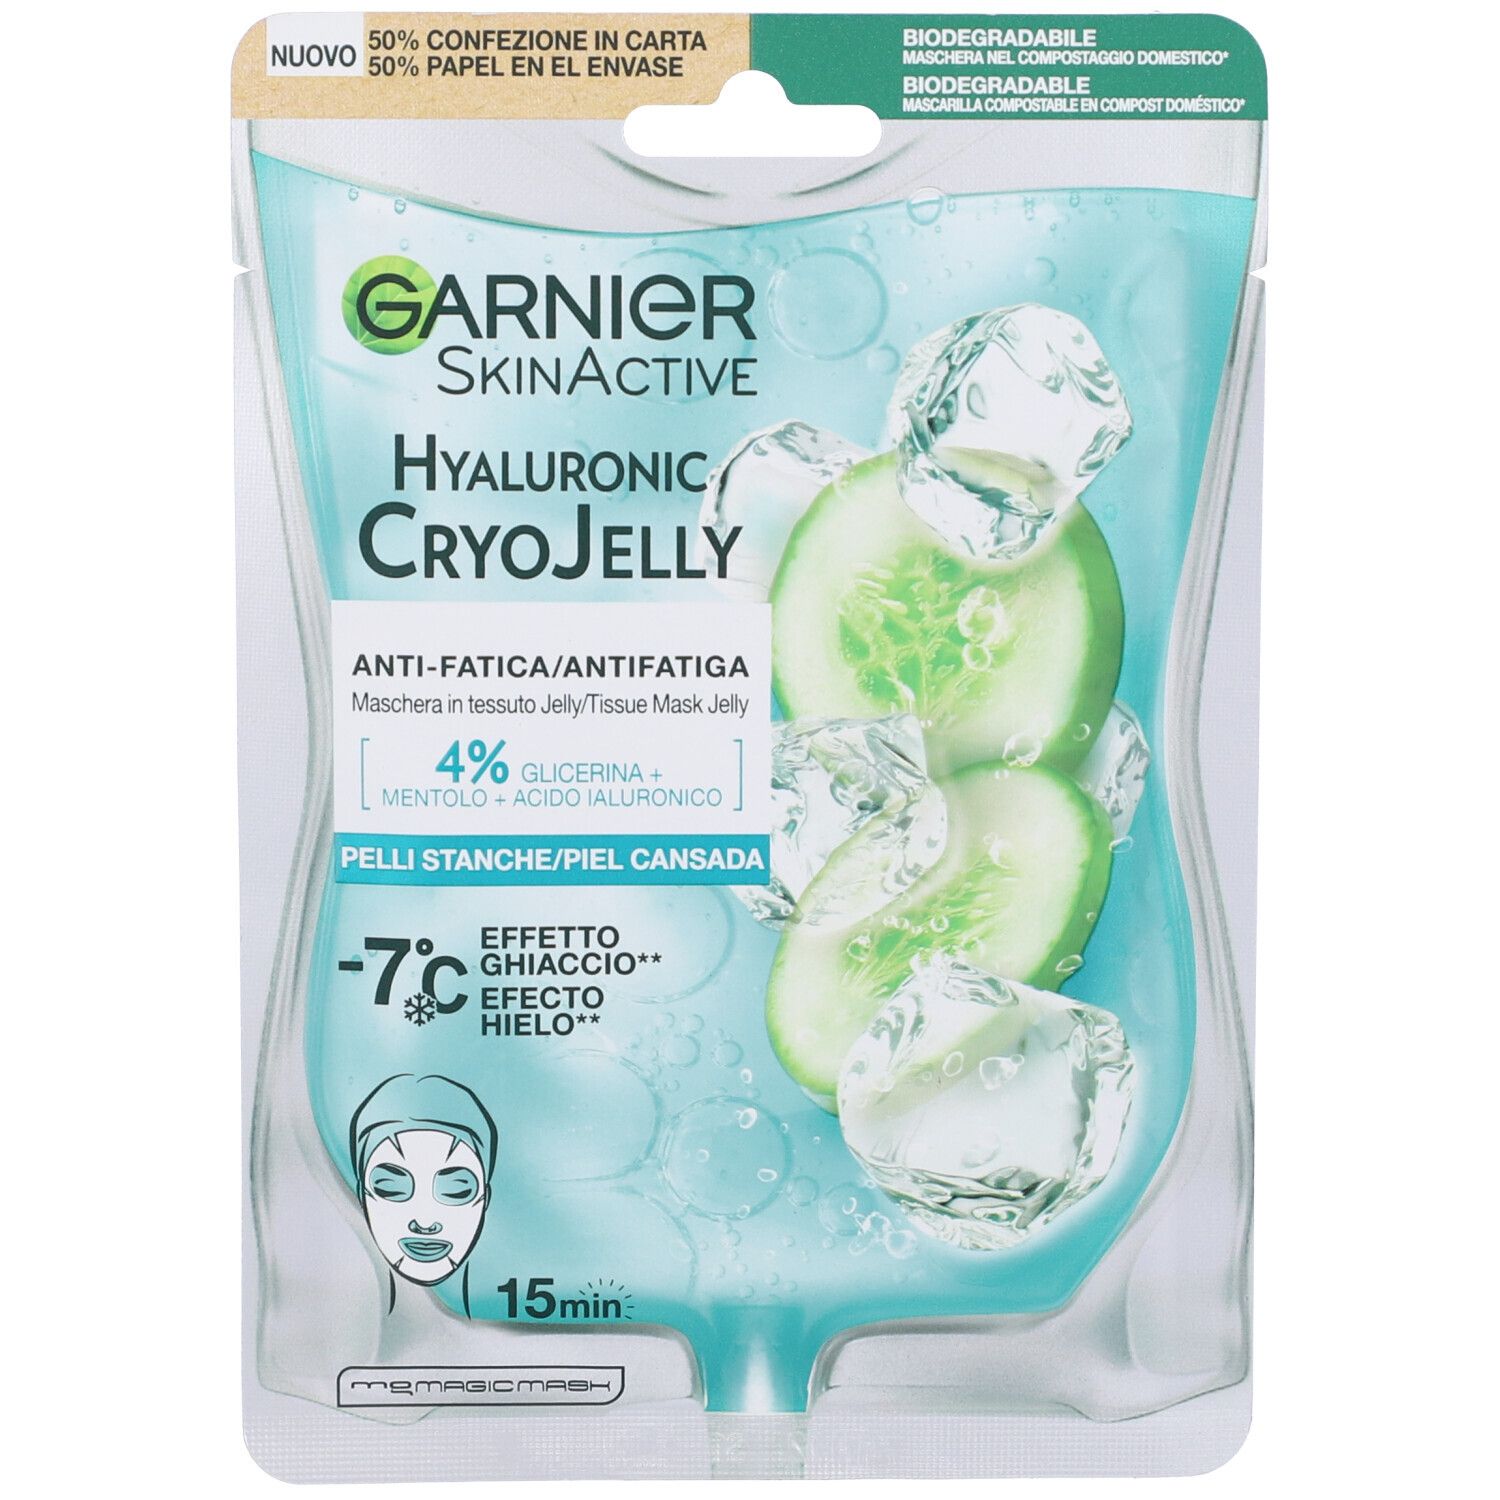 Garnier Skinactive Hyaluronic CryoJelly maschera in tessuto jelly anti-fatica